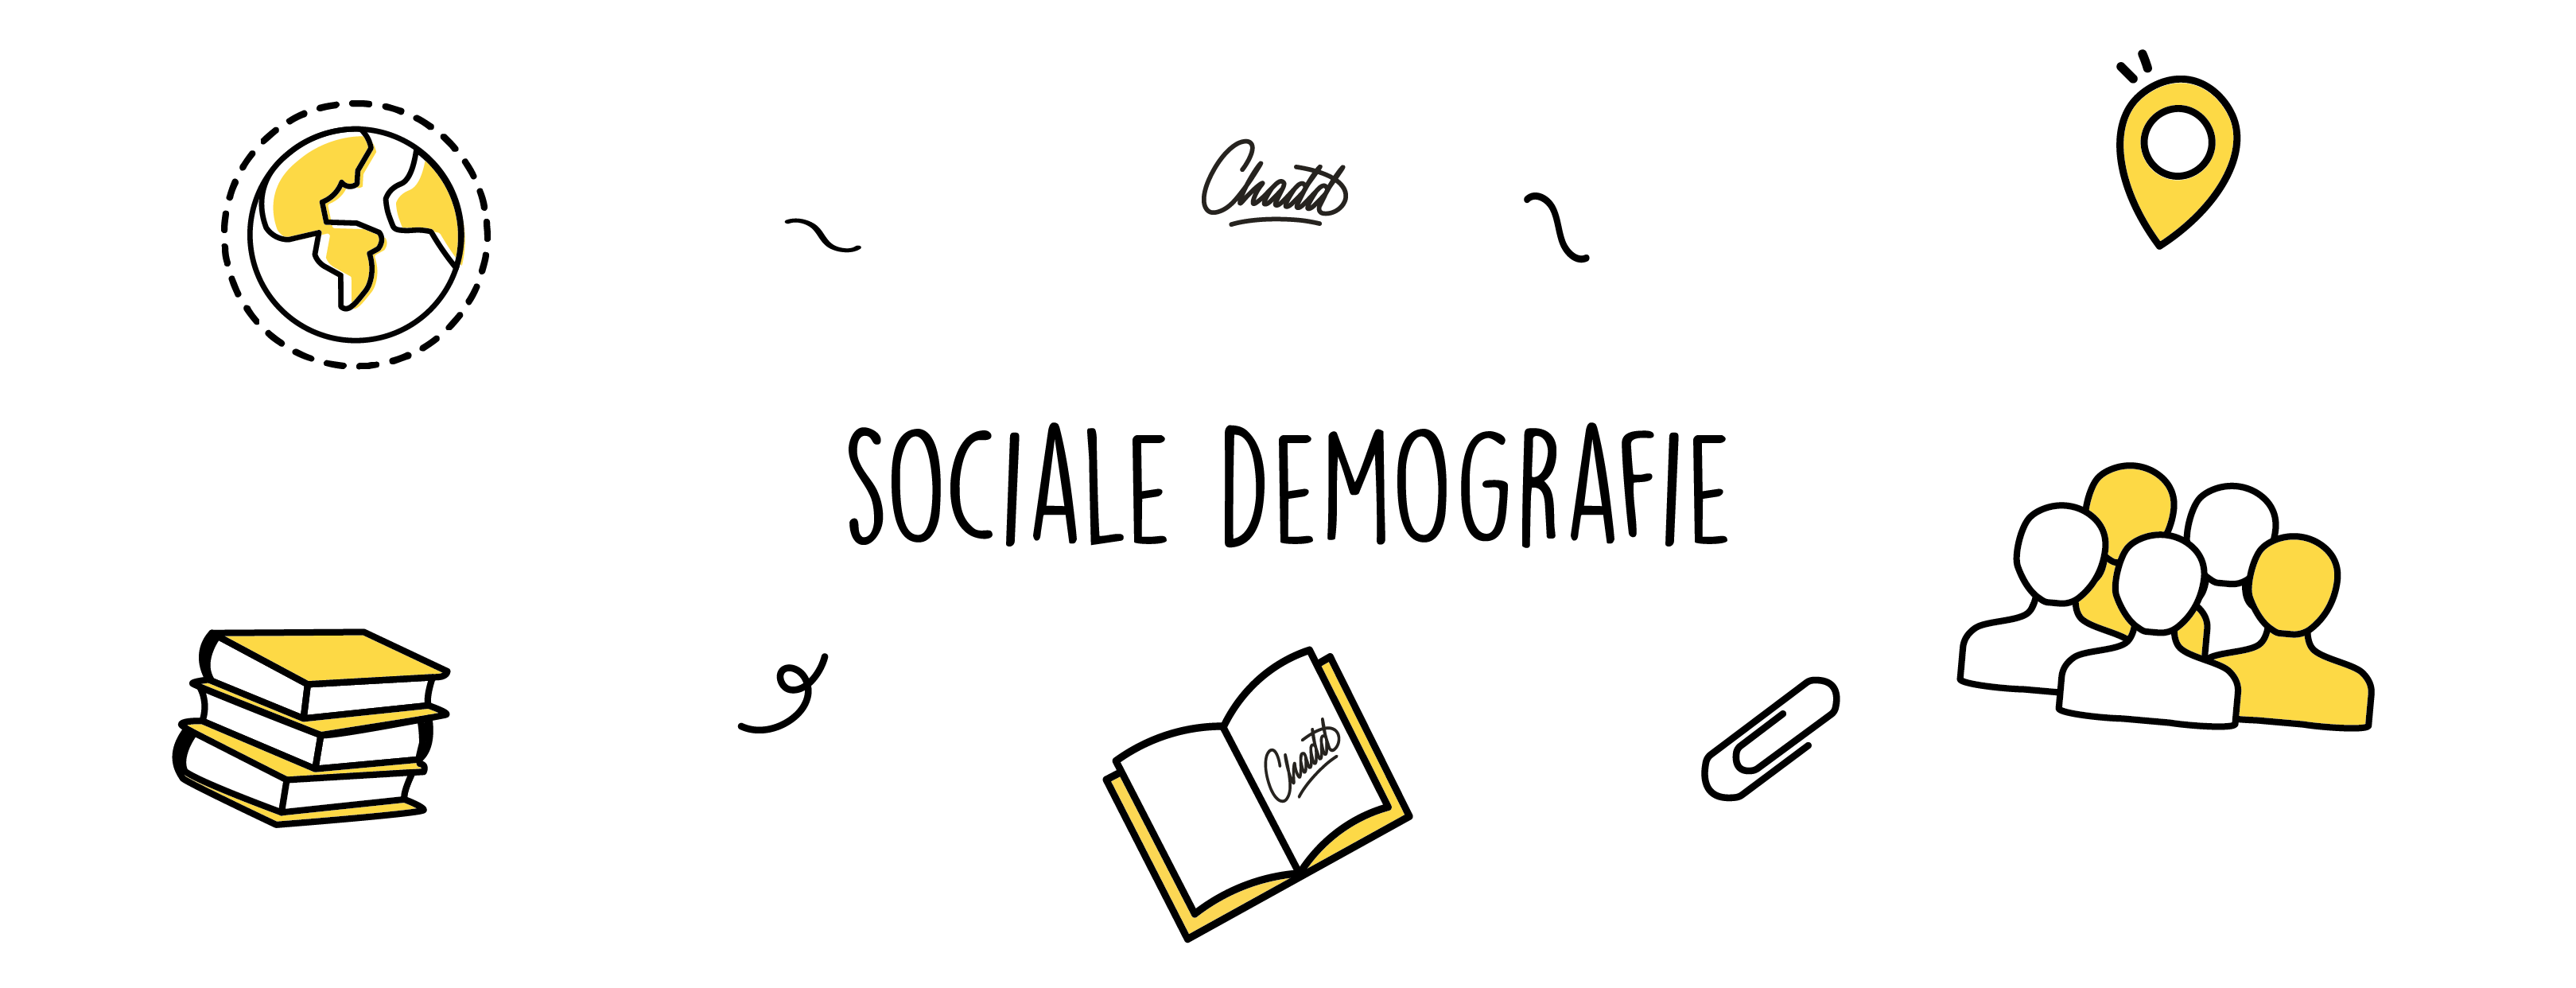 sociale demografie